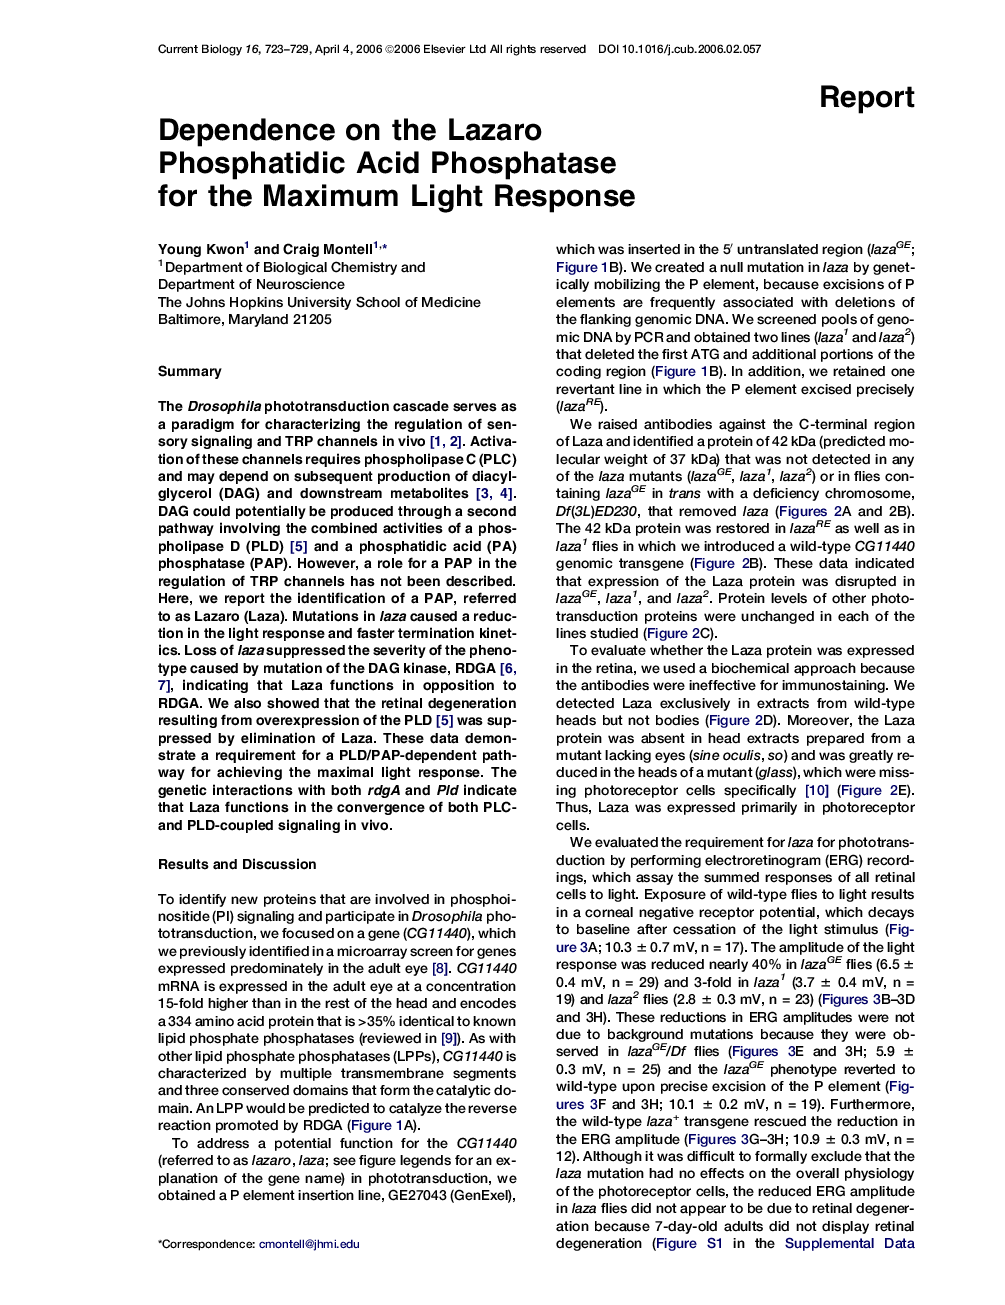 Dependence on the Lazaro Phosphatidic Acid Phosphatase for the Maximum Light Response